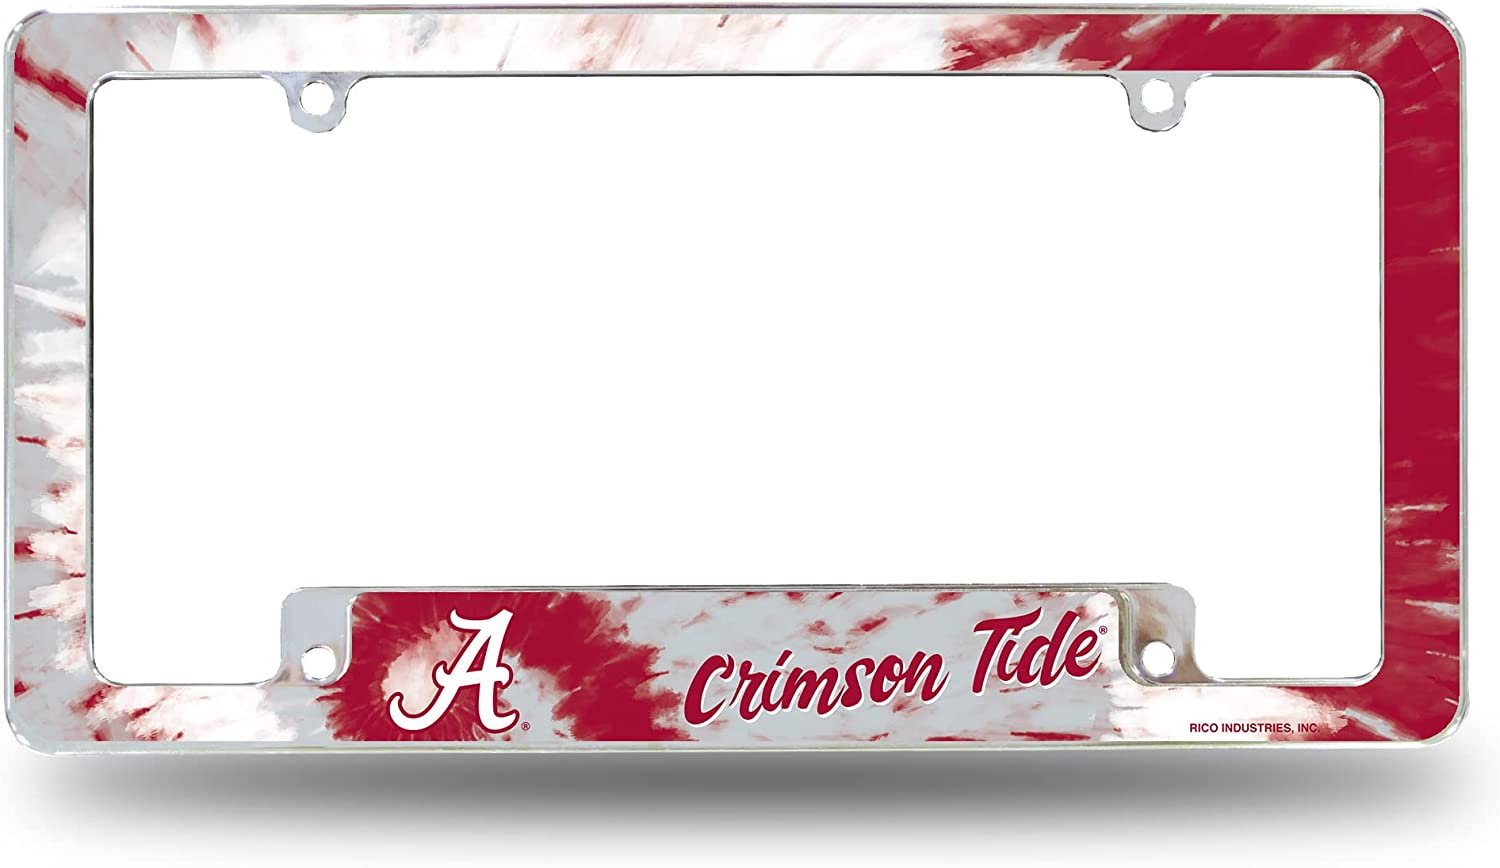 University of Alabama Crimson Tide Metal License Plate Frame Chrome Tag Cover 12x6 Inch Tie Dye Design